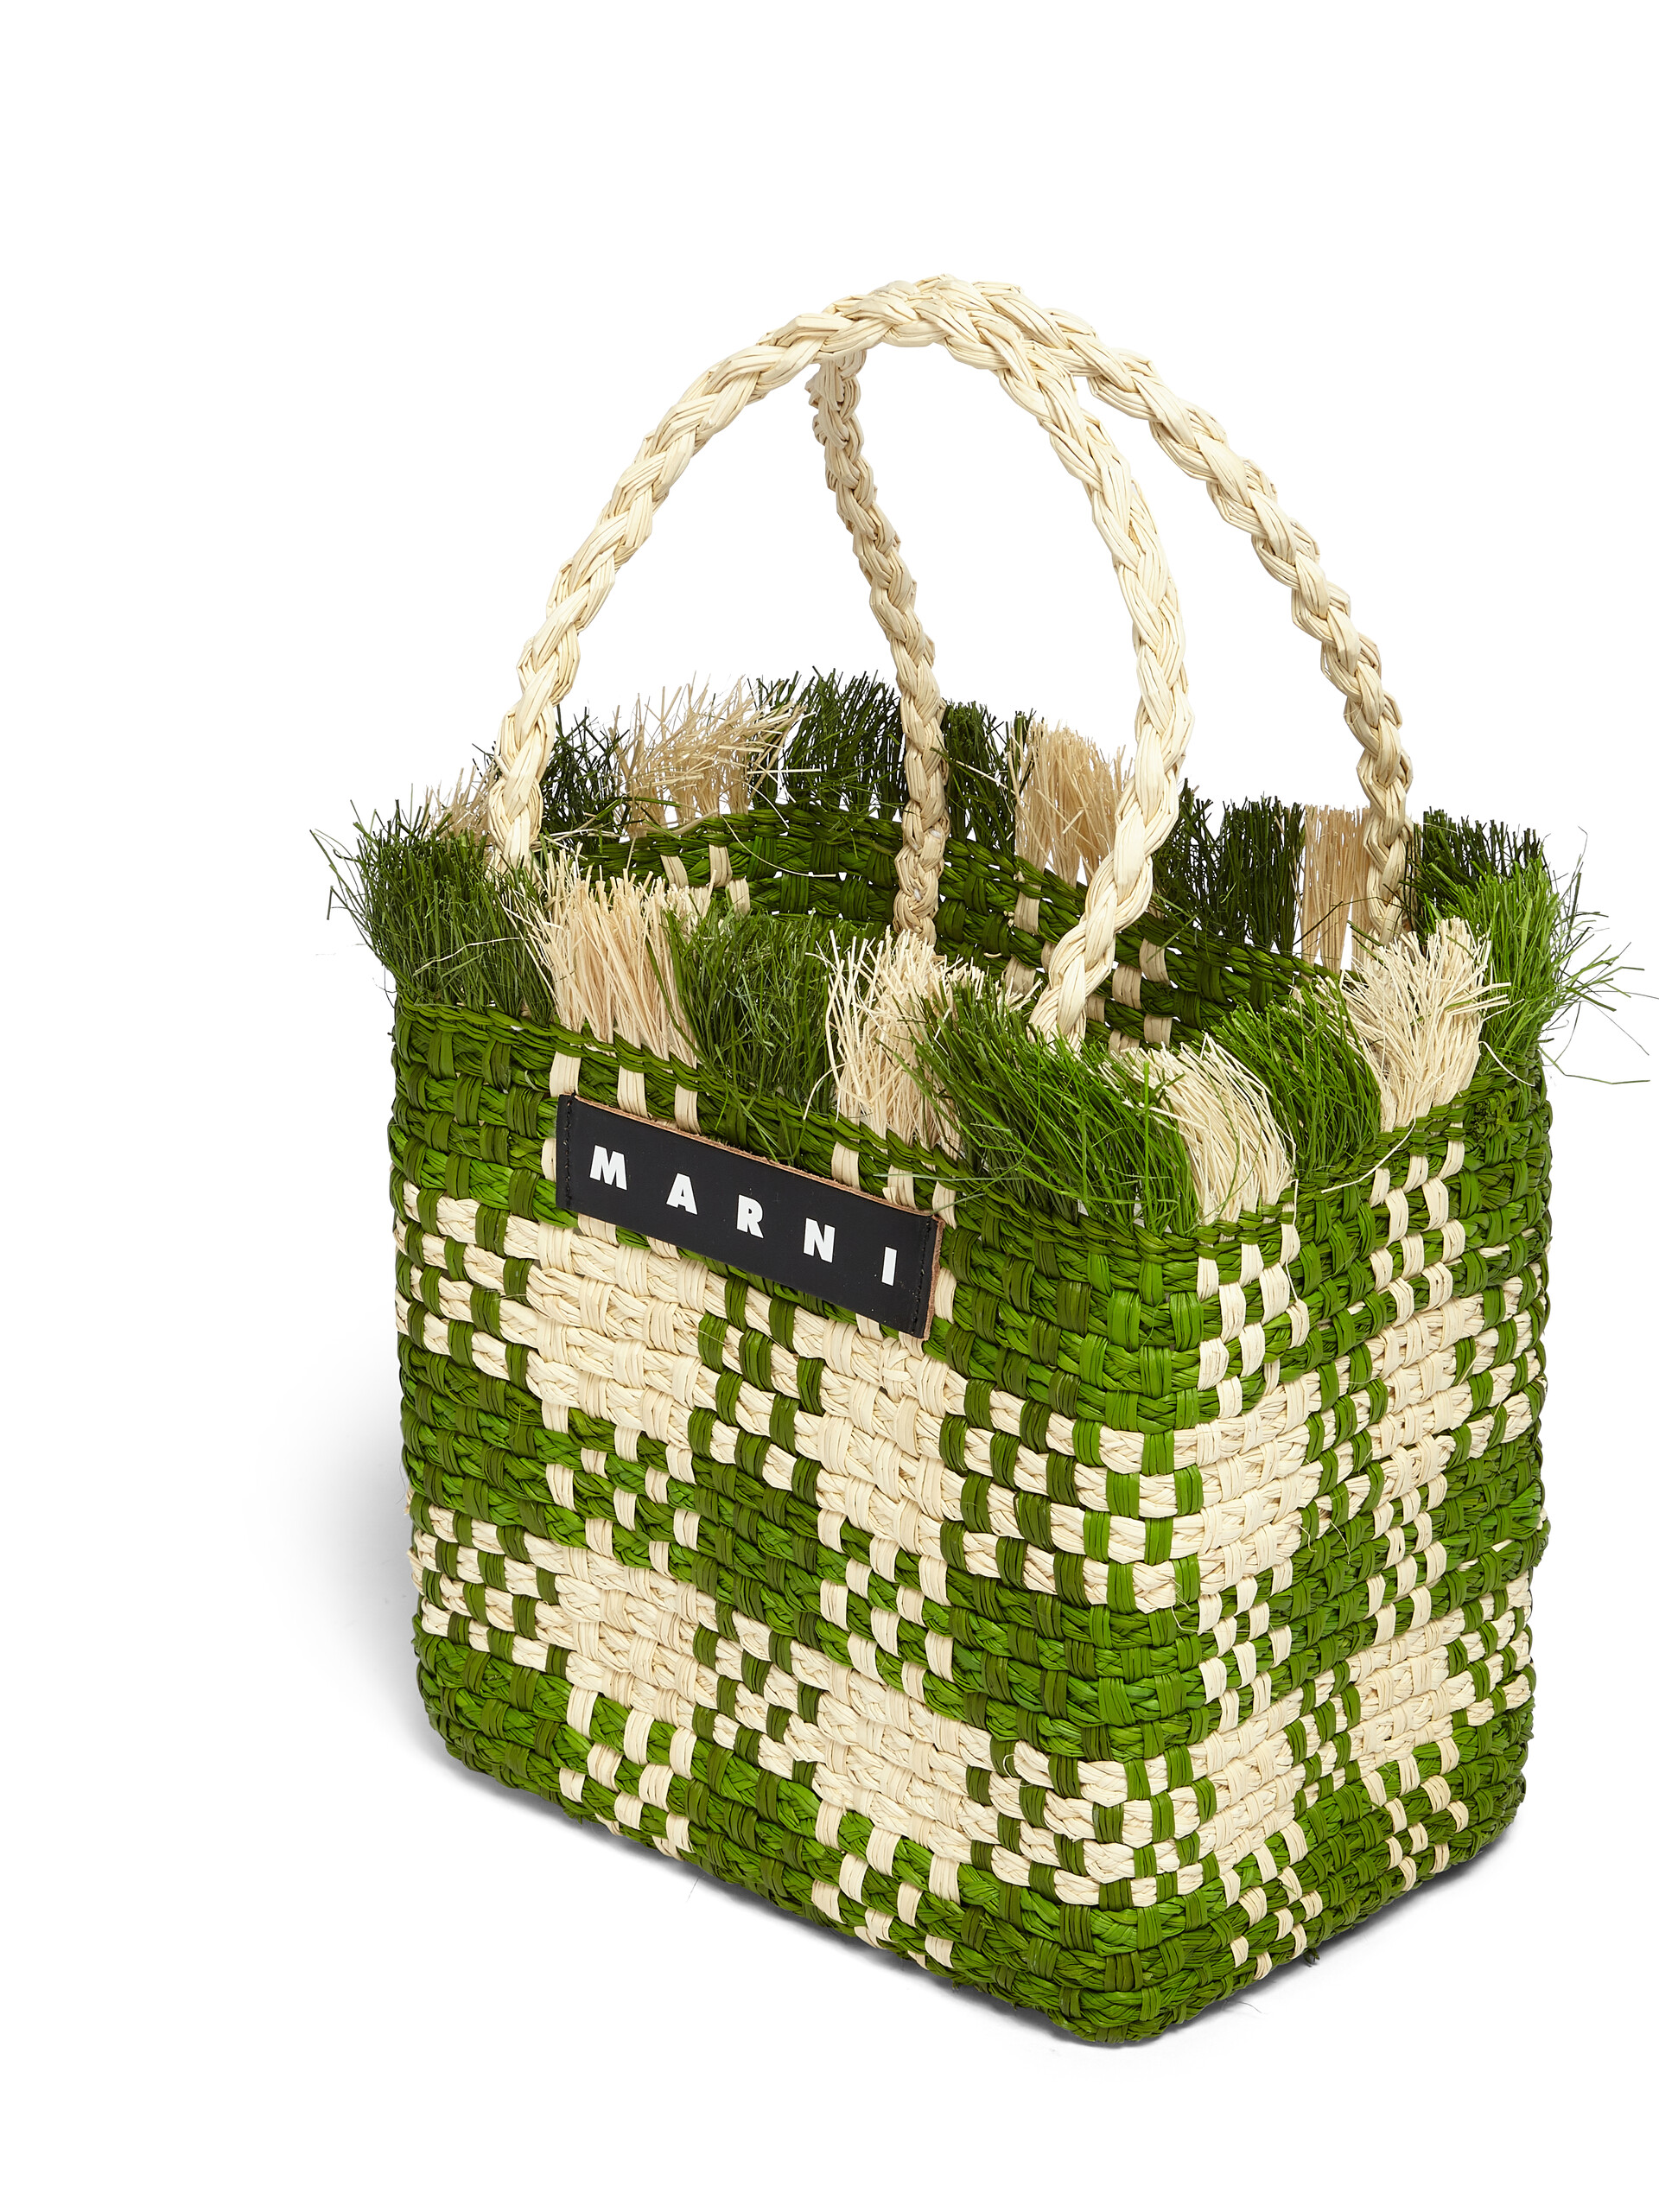 MARNI MARKET small bag in green natural fiber - Bags - Image 4